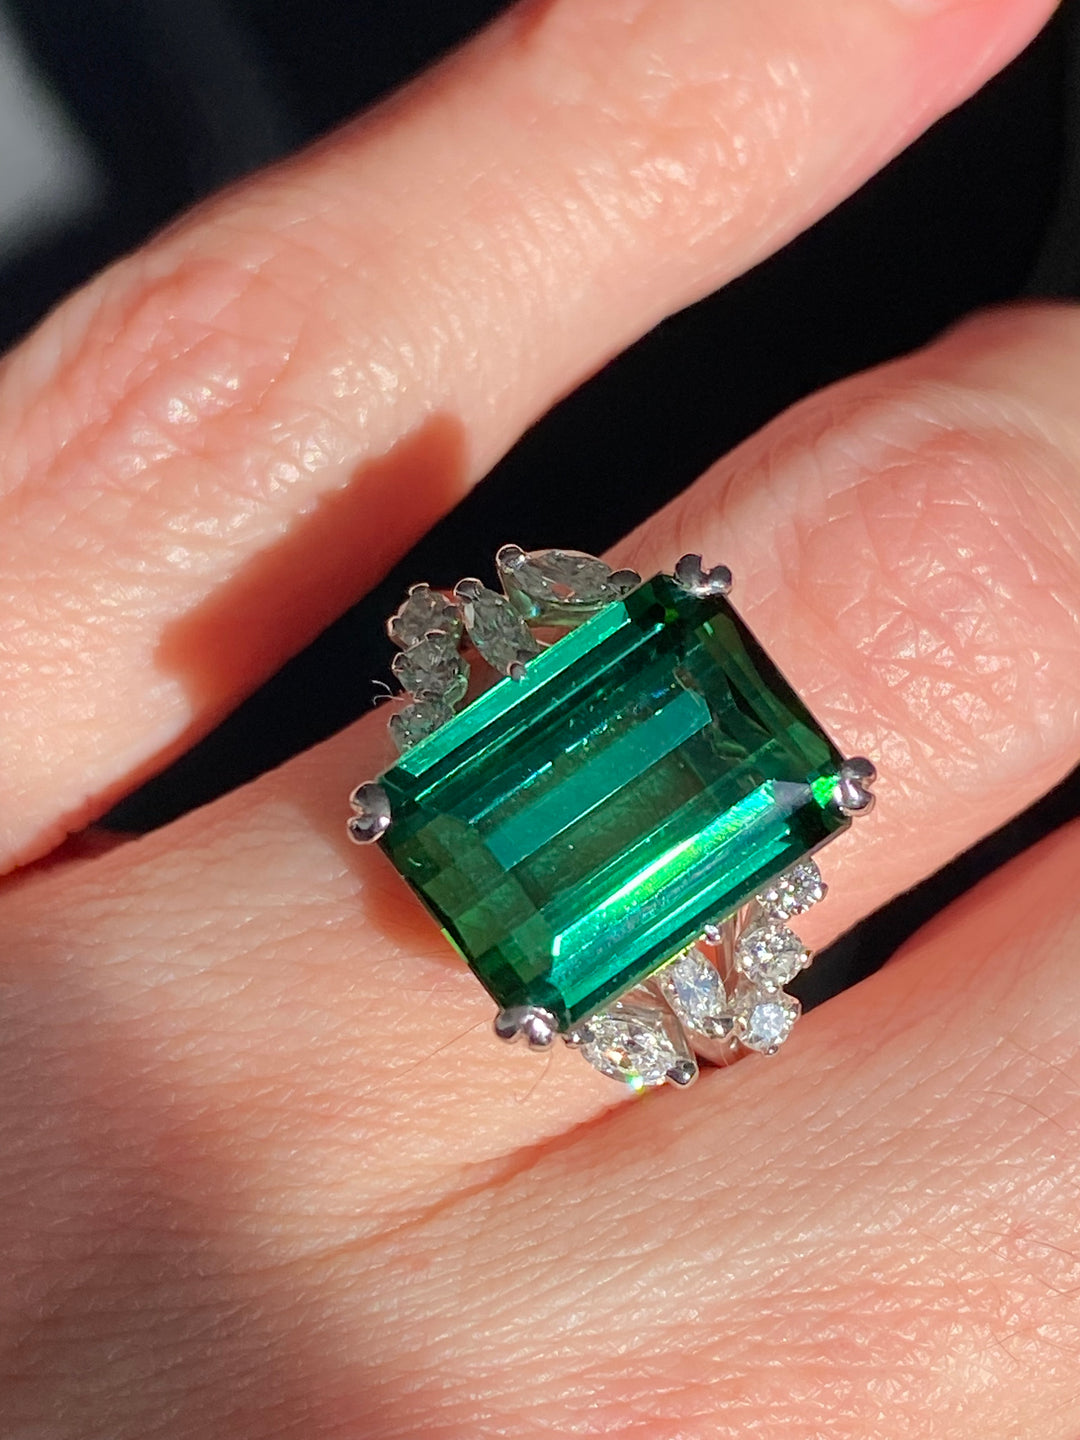 8.00 Carat Emerald Cut Green Tourmaline and Diamond Ring in 18ct White Gold